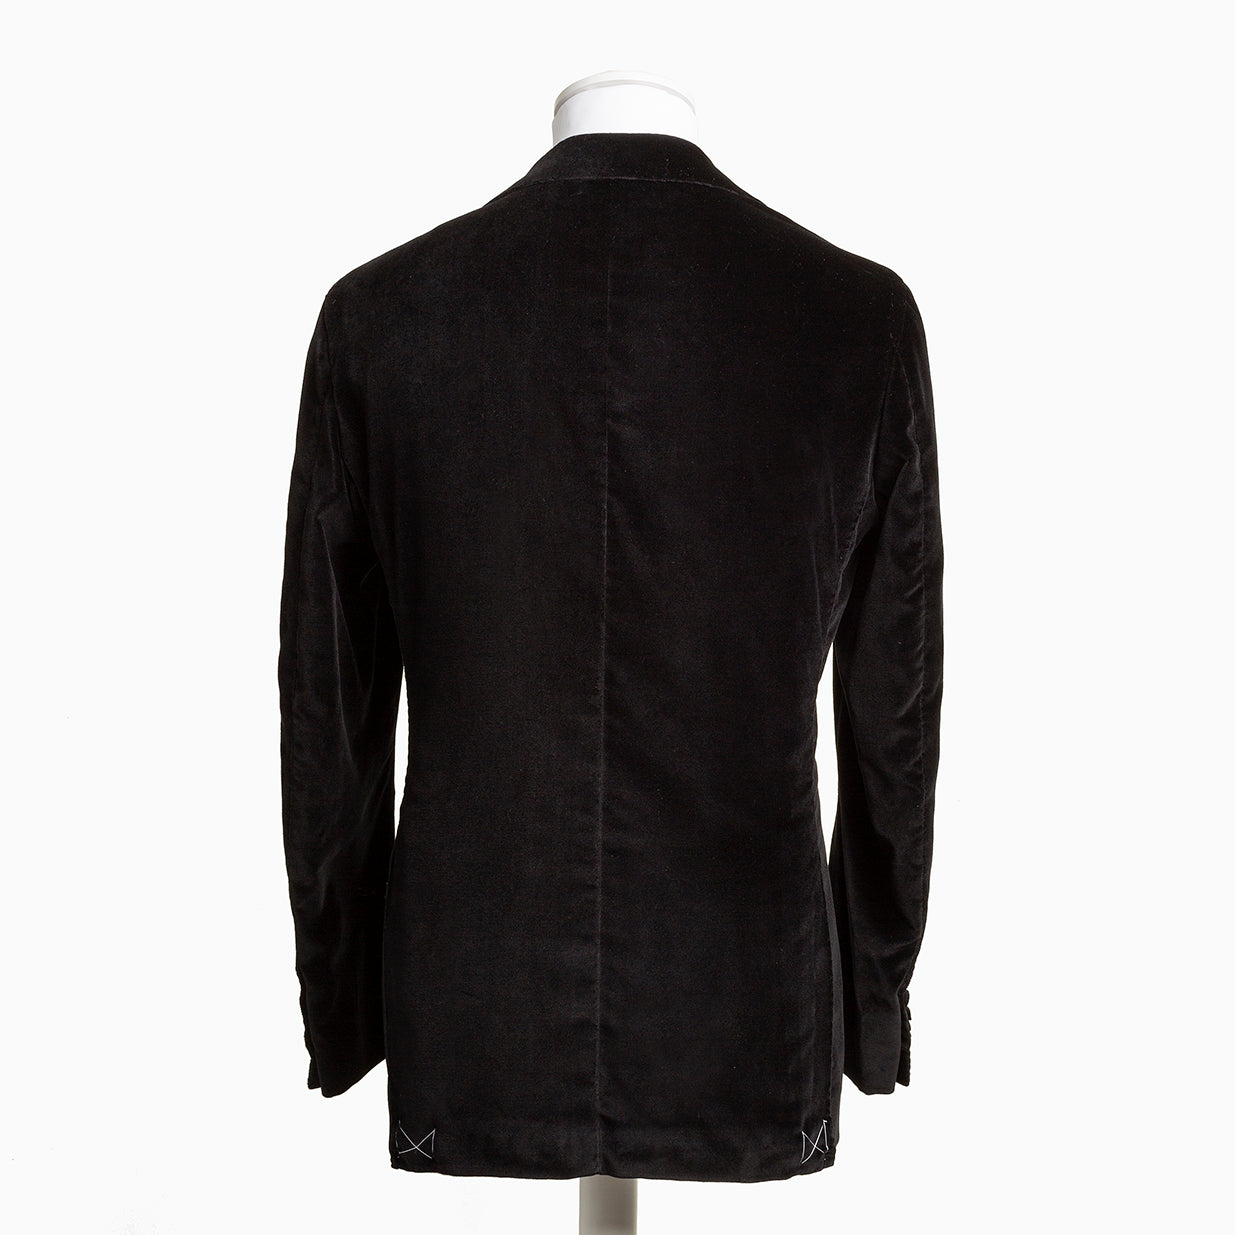 The Black Velvet Jacket – Orazio Luciano